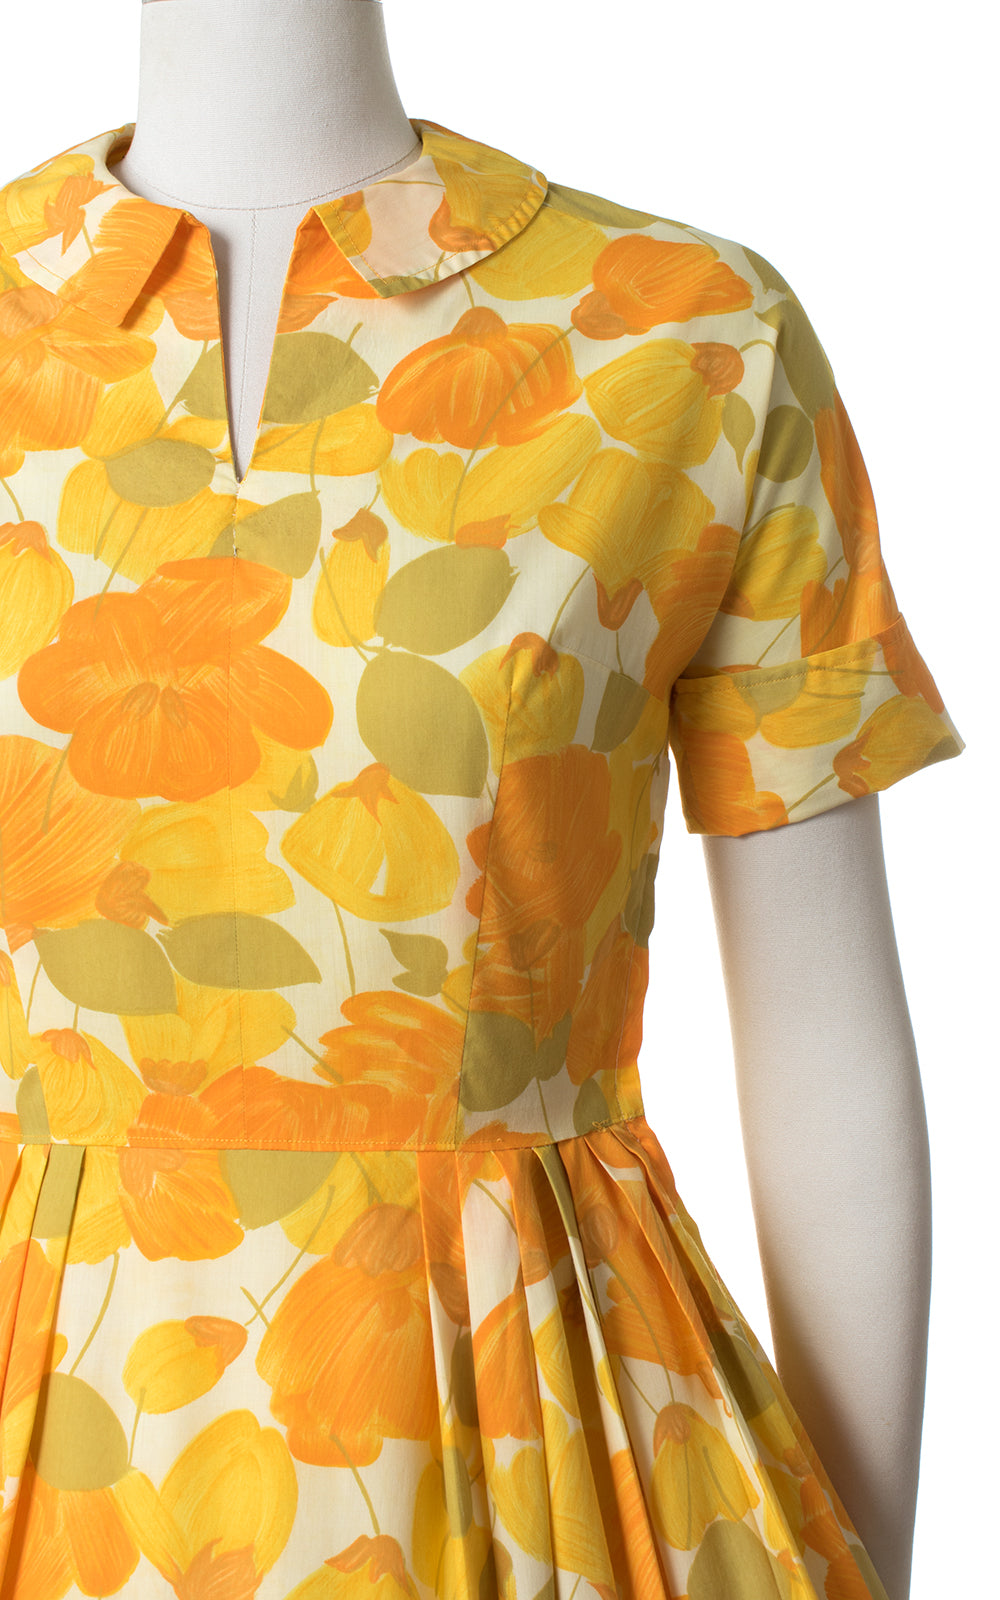 1950s Orange Floral Print Cotton Day Dress